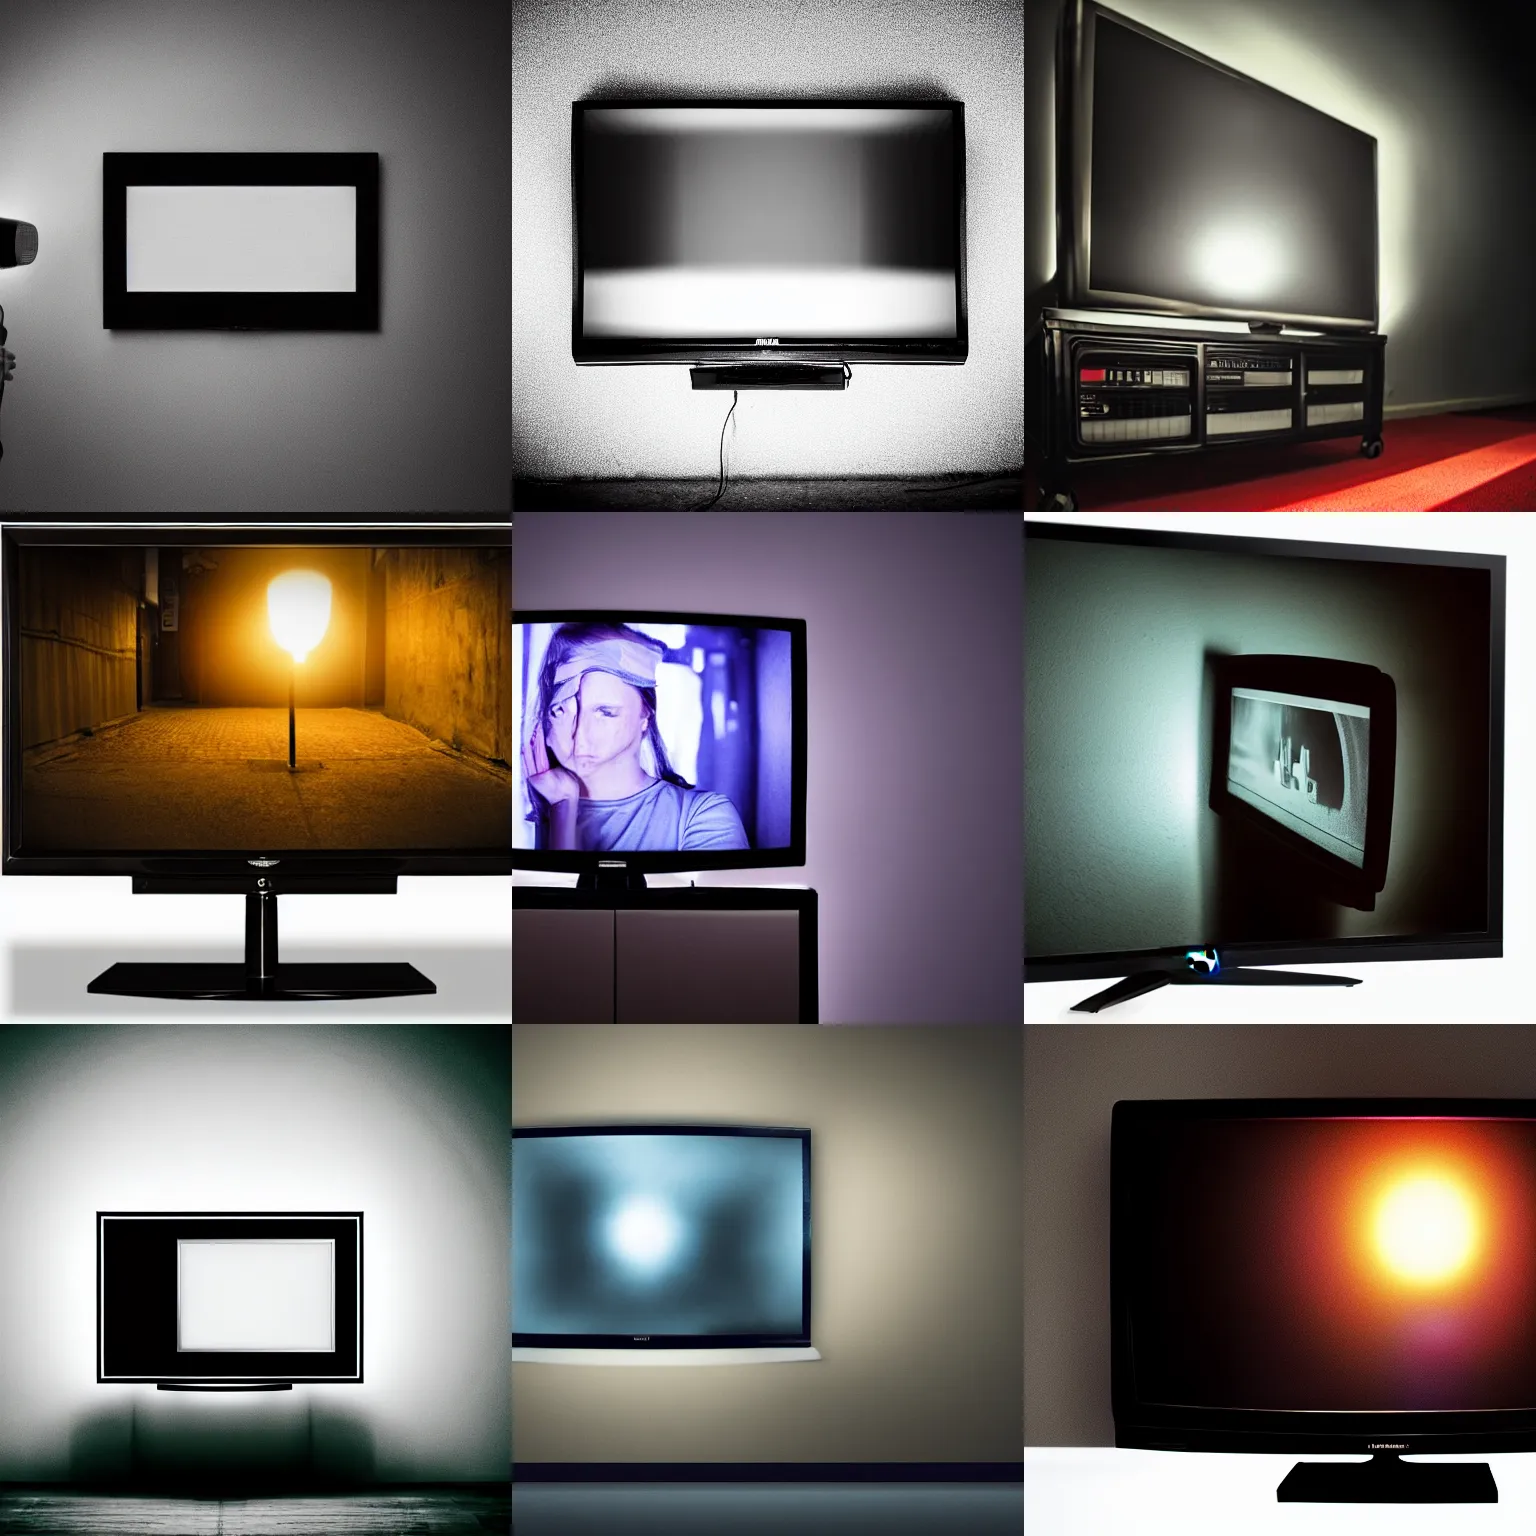 Prompt: malfunctioning tv in a dark room, dramatic lighting, award winning photography